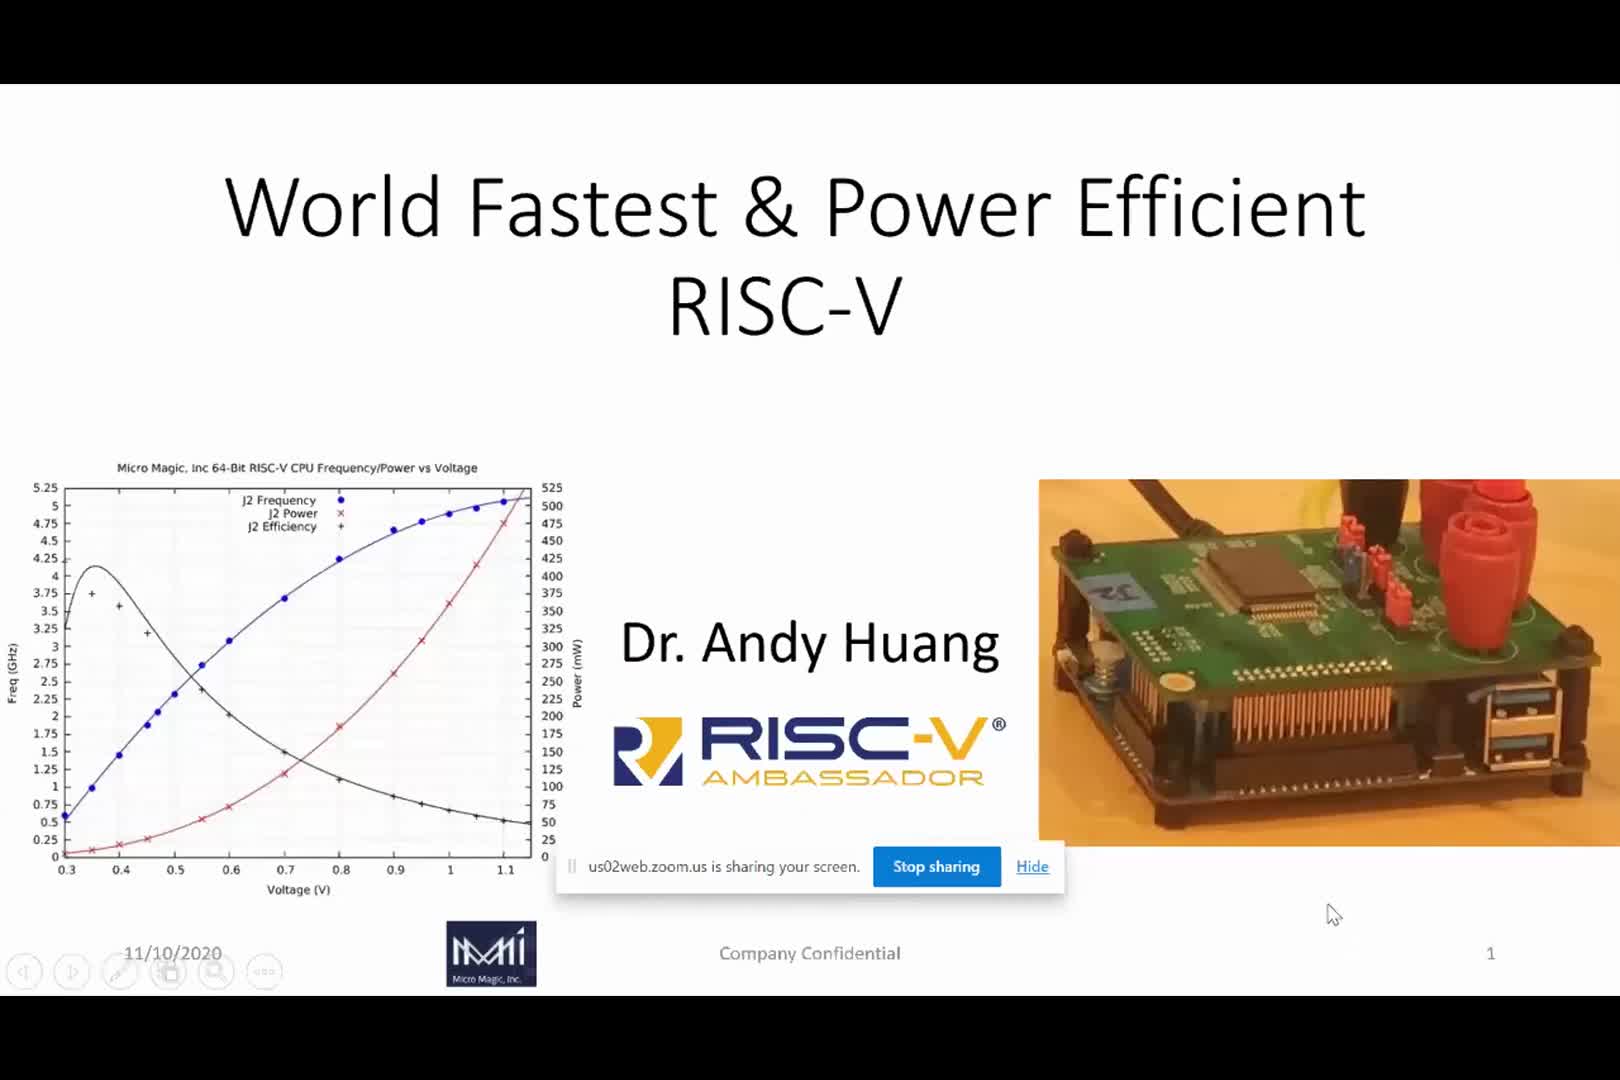 World Fastest & Power Efficient -- RISC-V